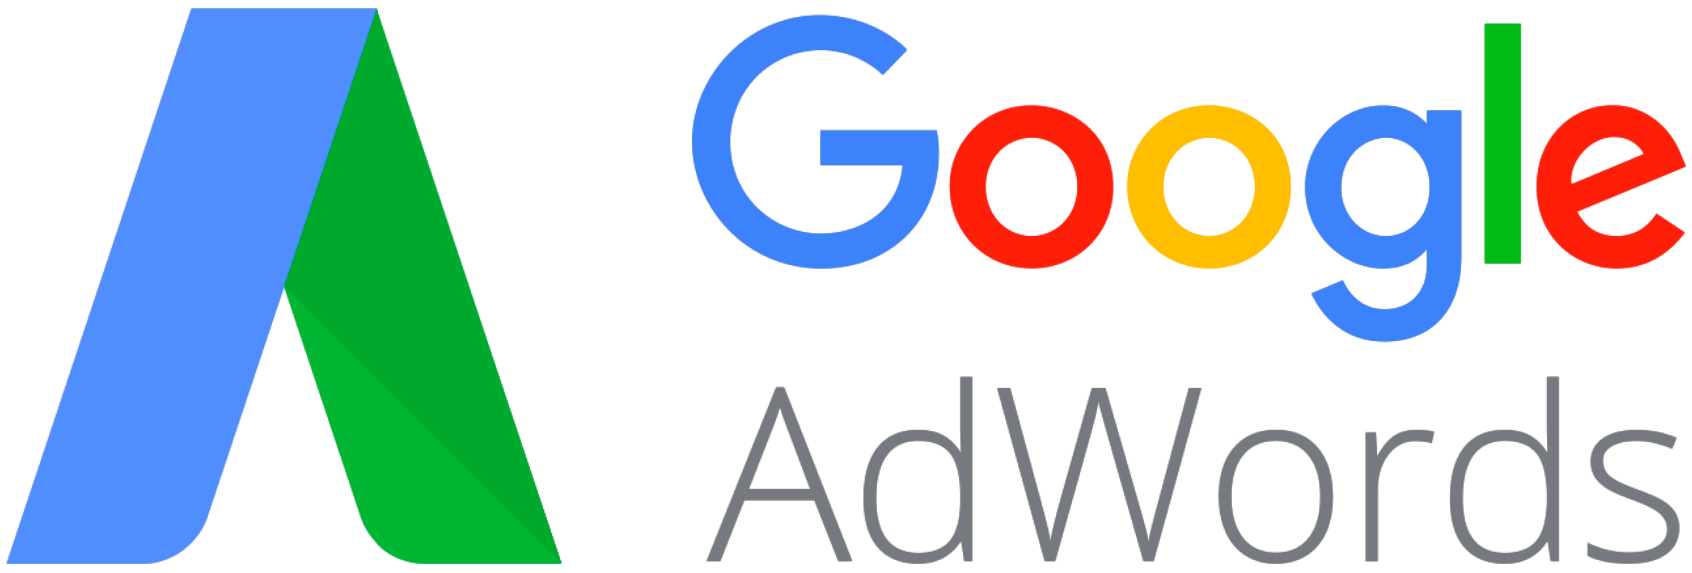 google-adwords-logo-png-large